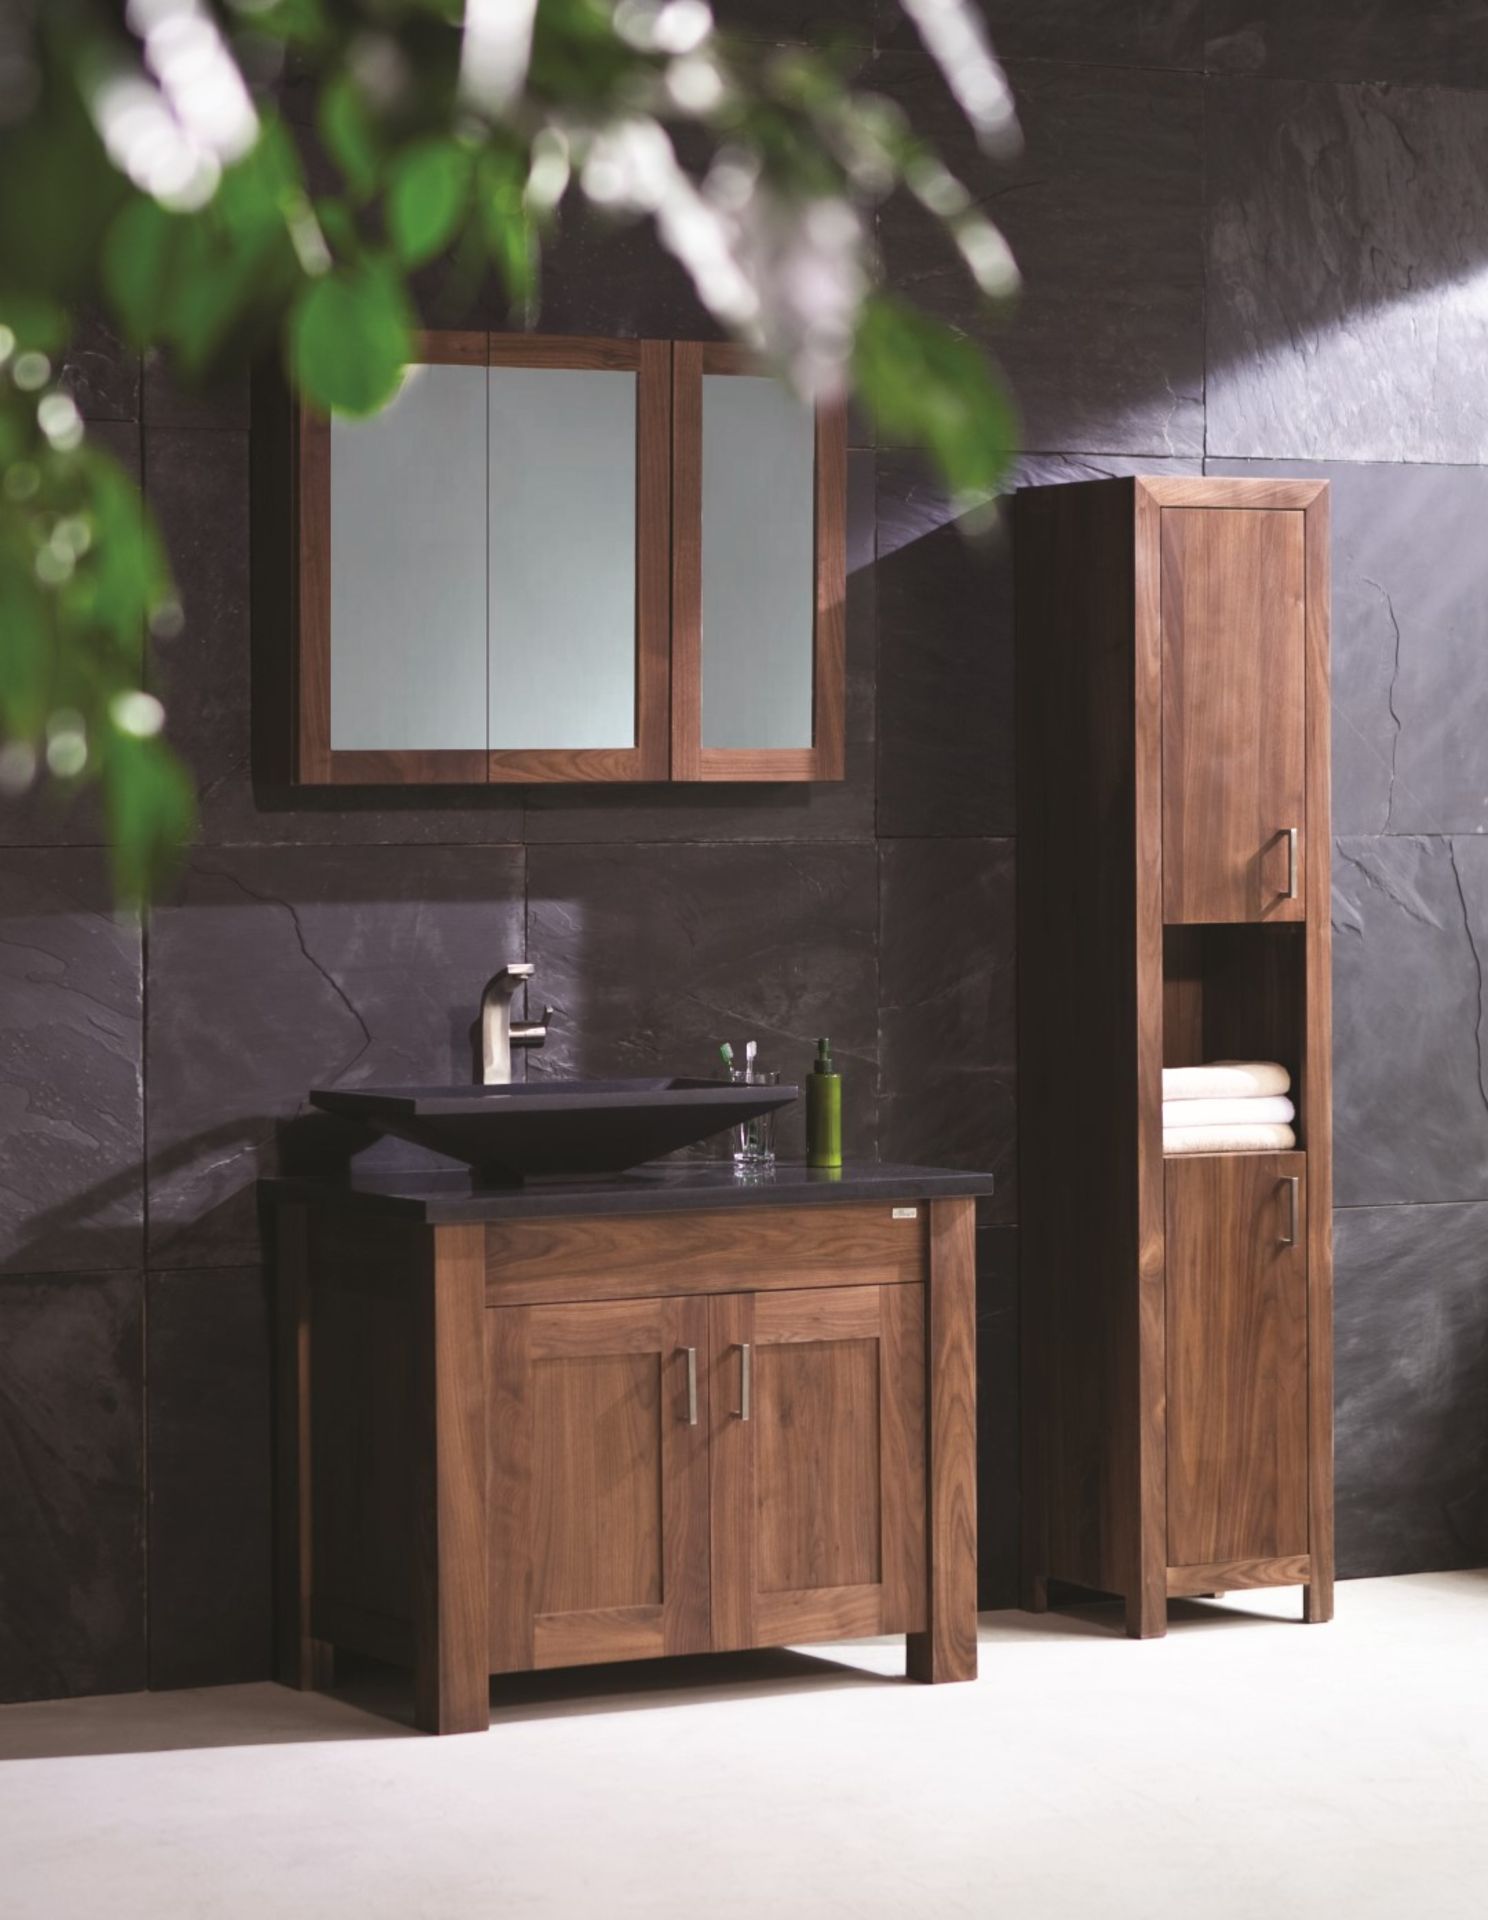 1 x Stonearth Freestanding Tallboy Bathroom Storage Cabinet - American Solid Walnut - RRP £996! - Image 5 of 14